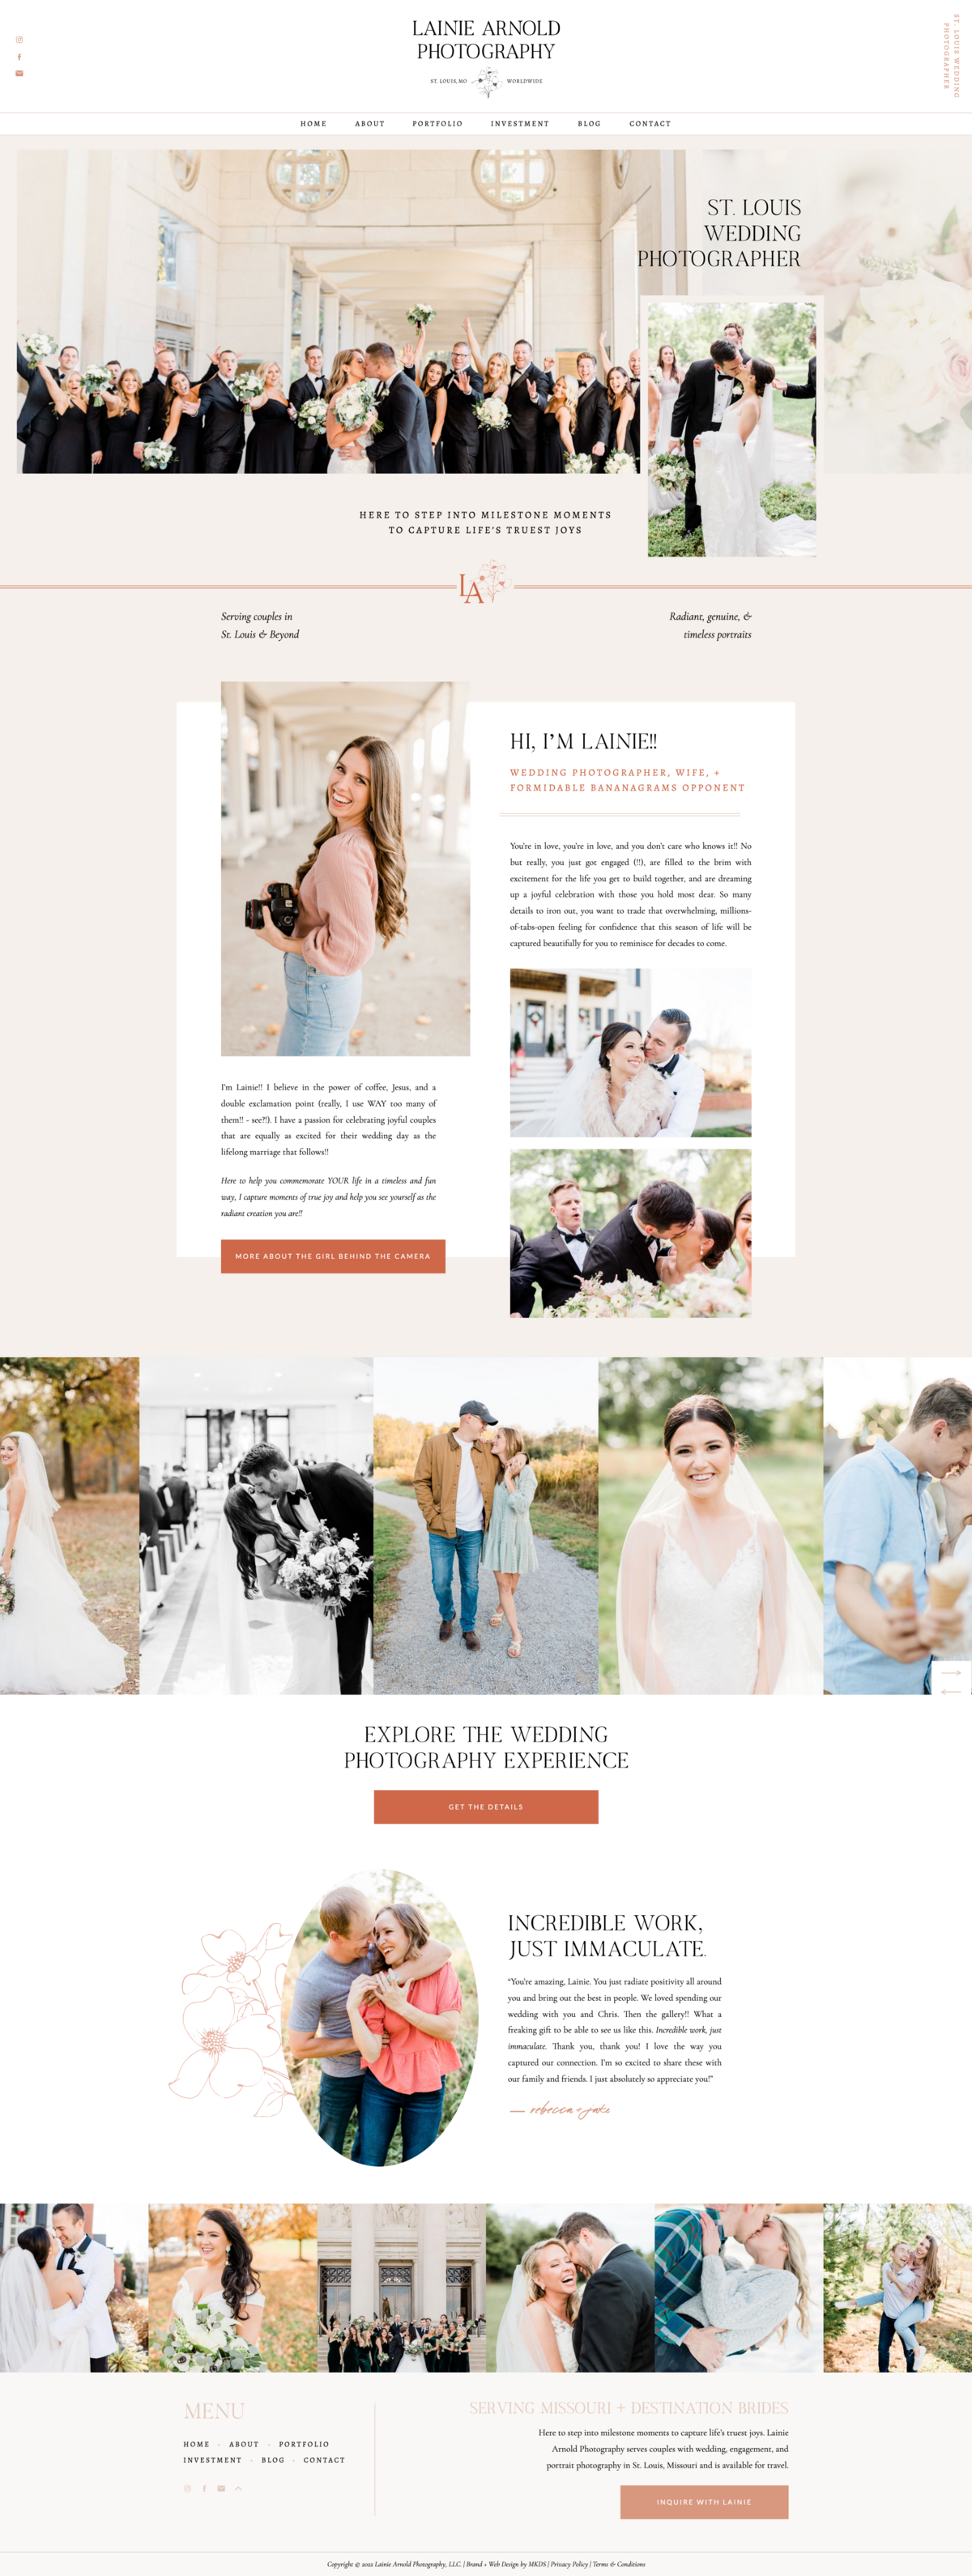 a mockup showing a joyful website design for a wedding photographer